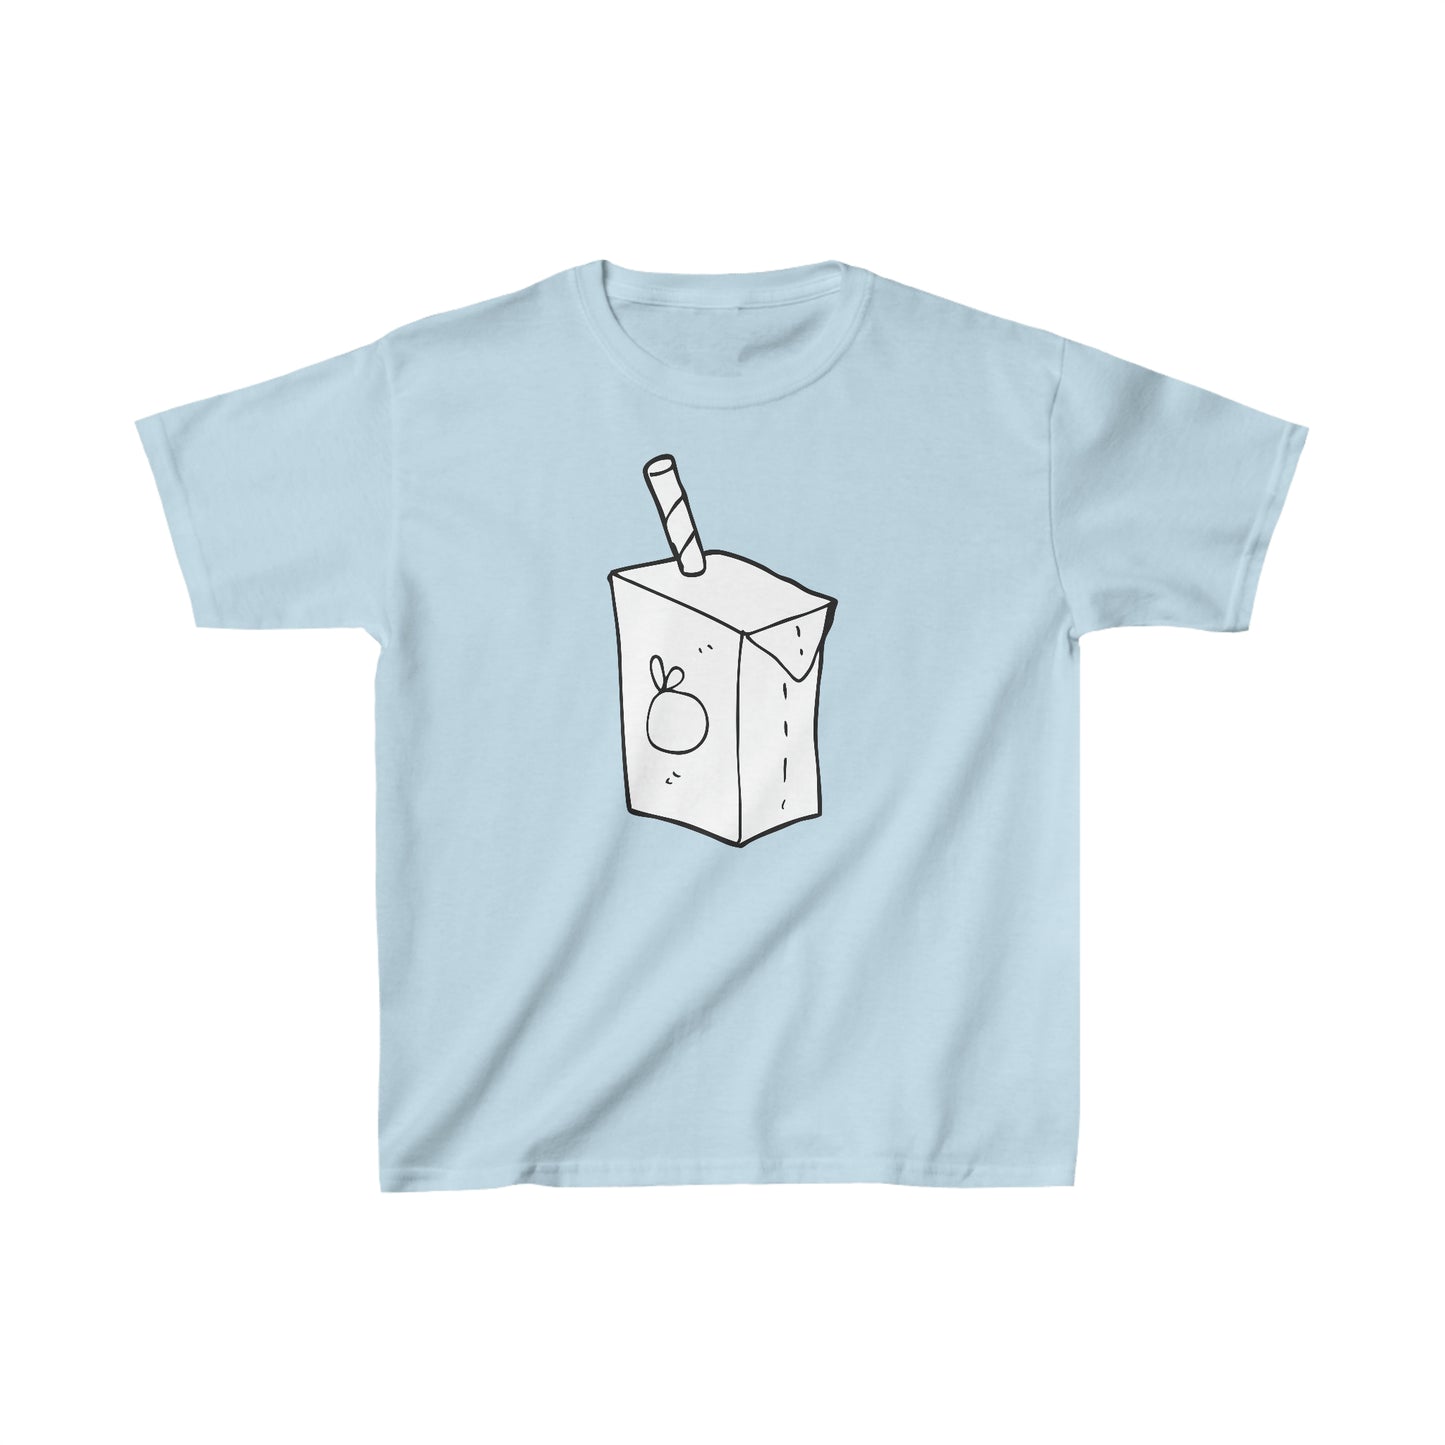 JUICE BOX Kids Heavy Cotton T-Shirt | Juice box | Snacks | Children's clothing